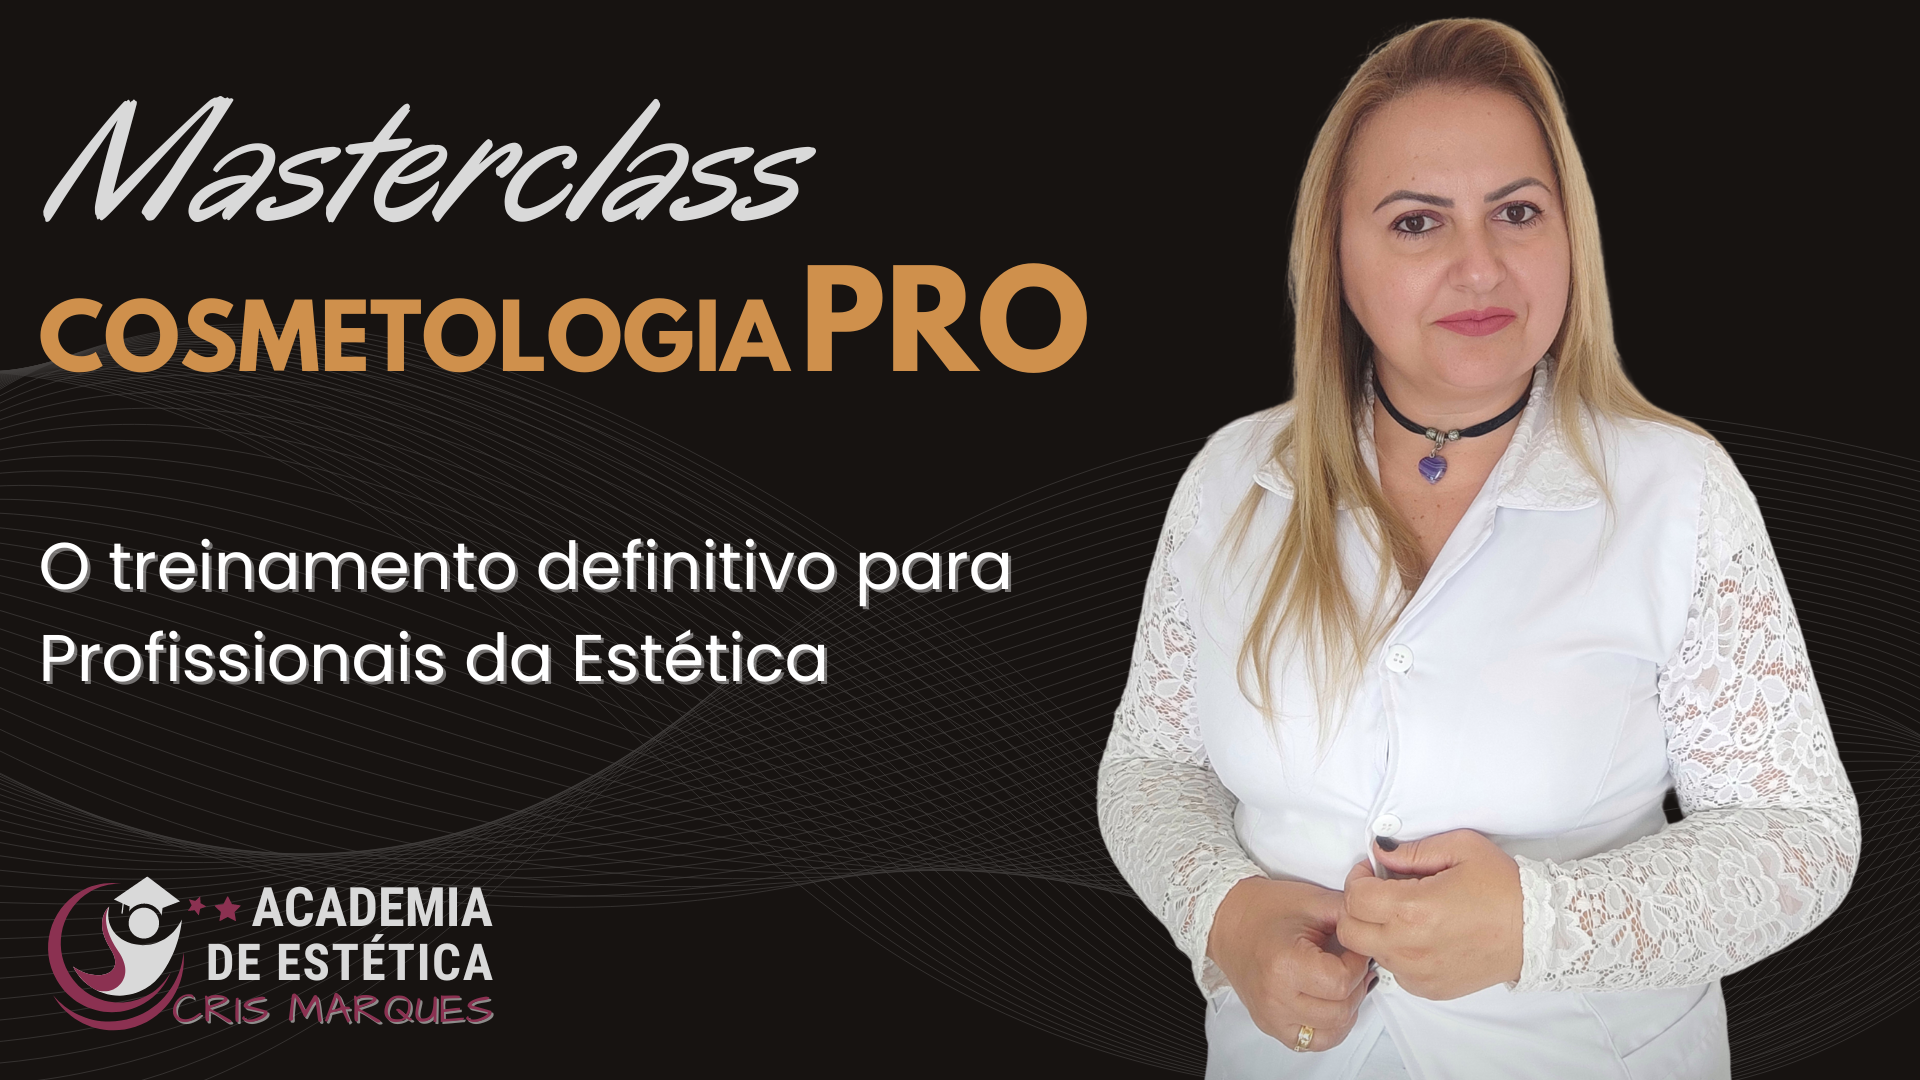 Masterclass Cosmetologia PRO